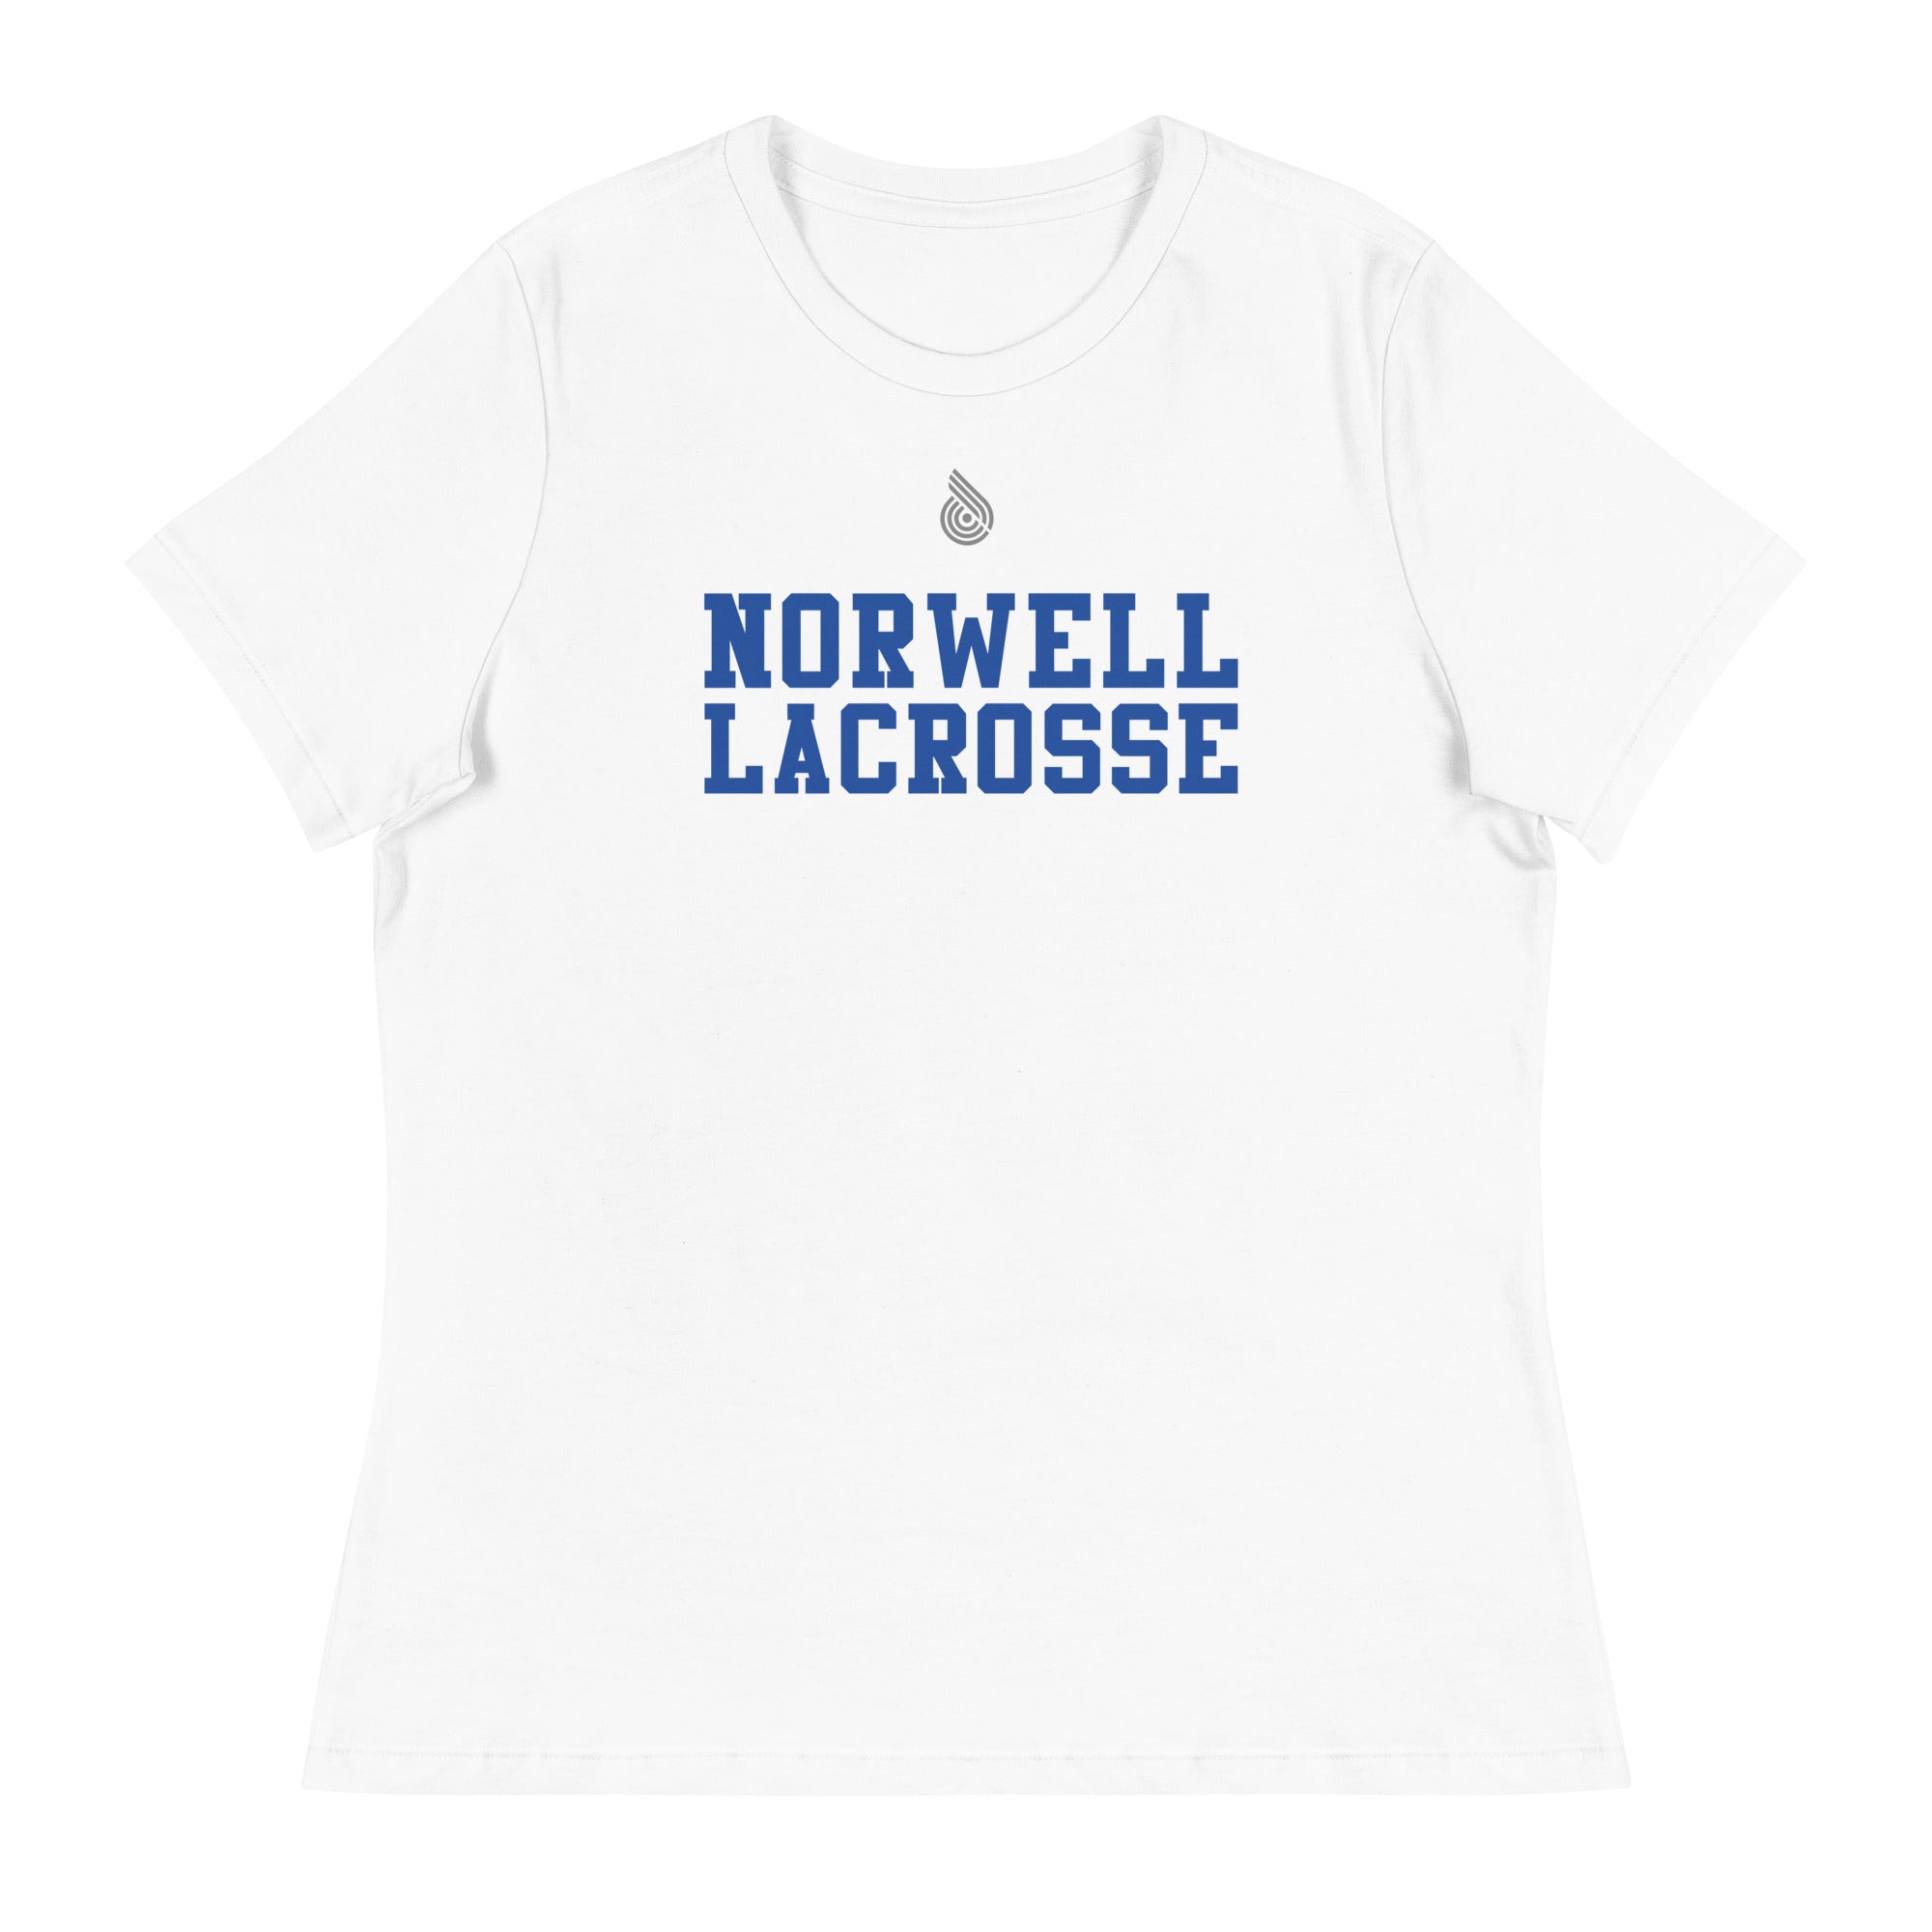 Norwell Women's T-Shirt